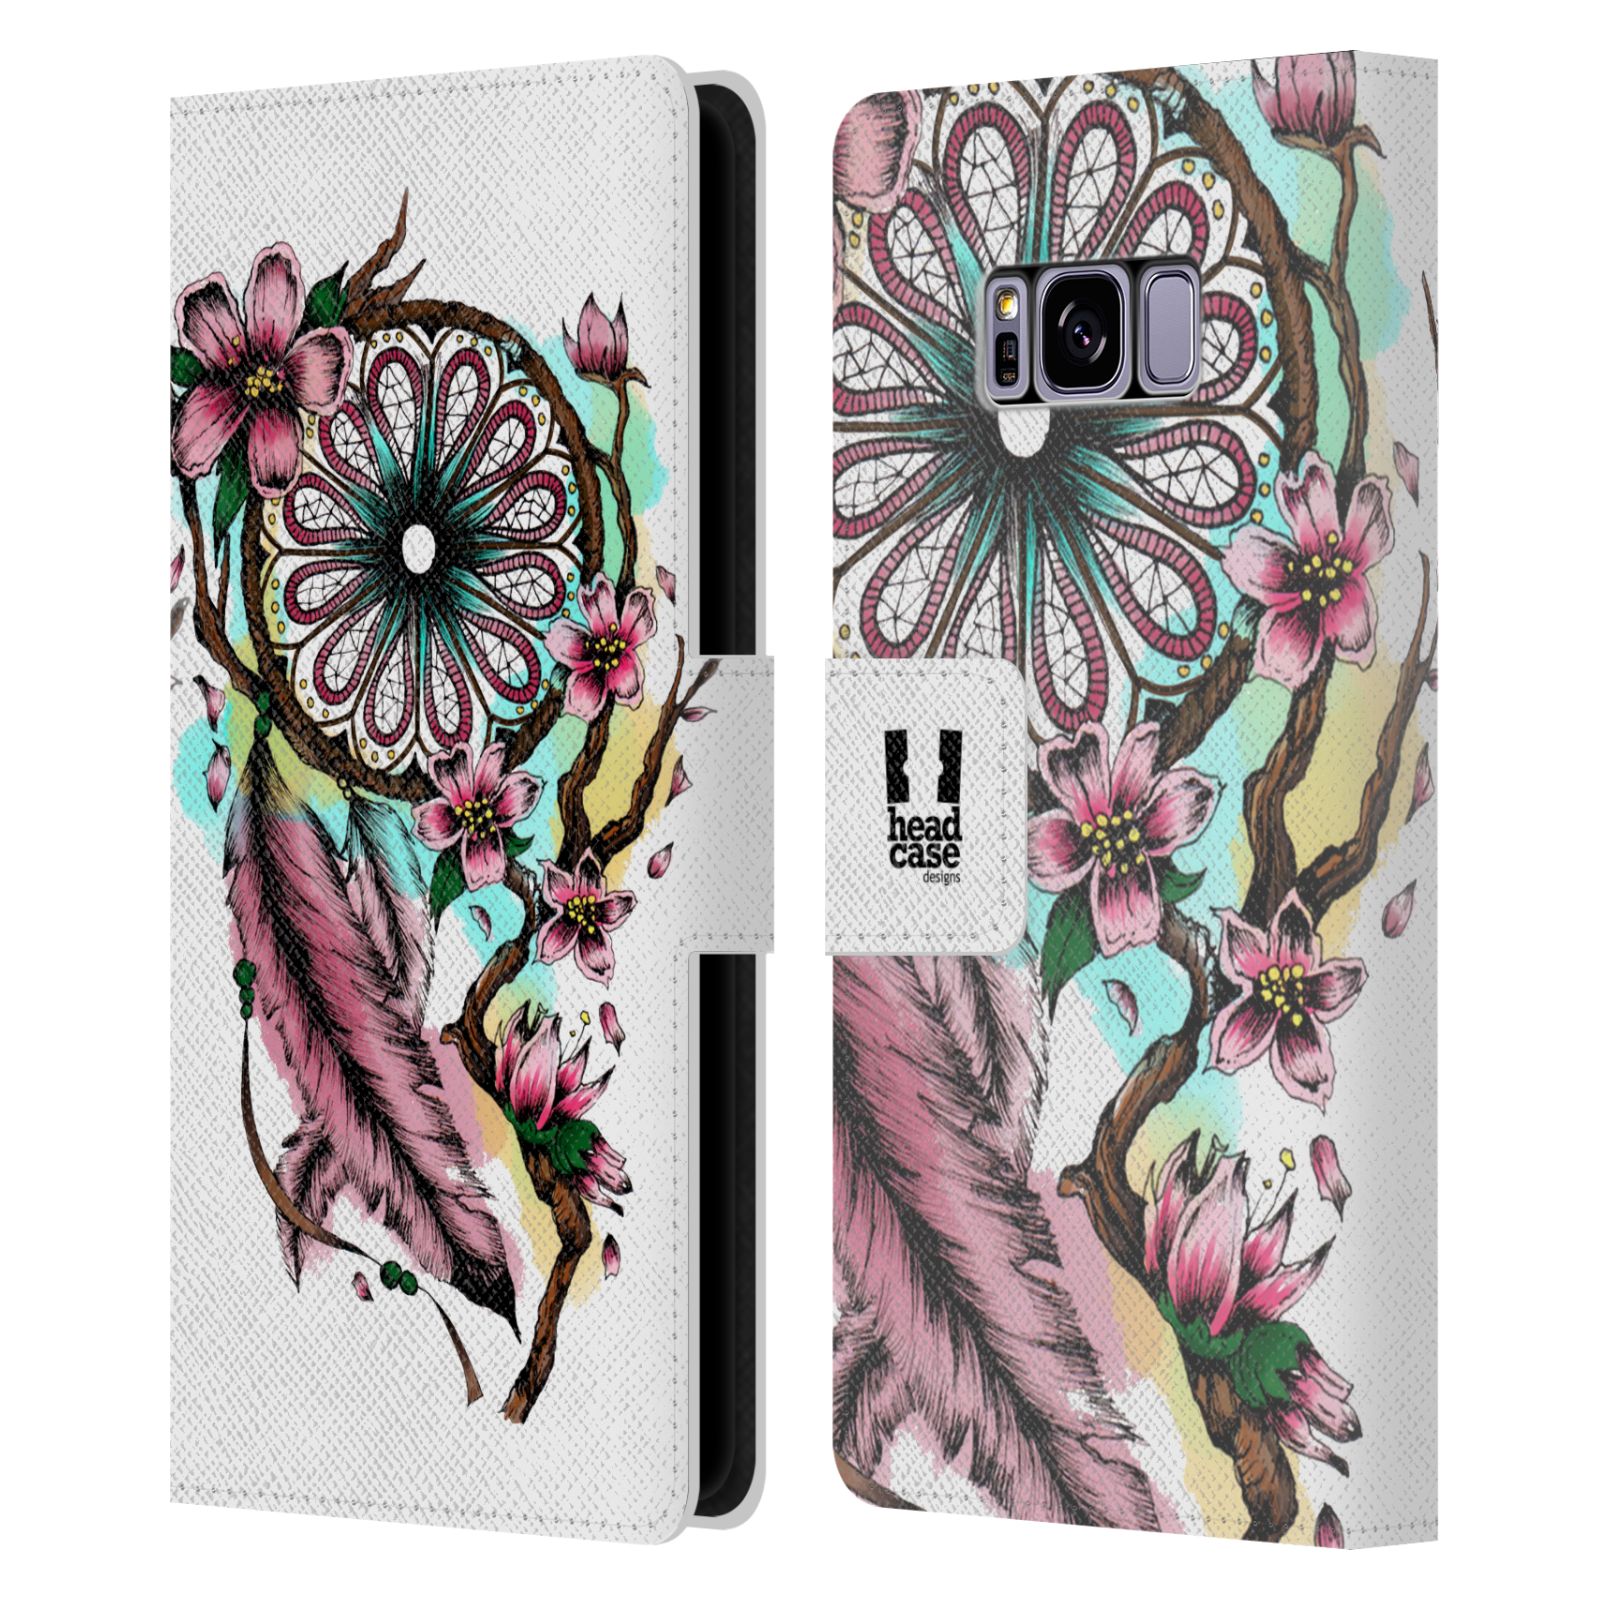 Pouzdro pro mobil Samsung Galaxy S8 - Květinový vzor lapač snů